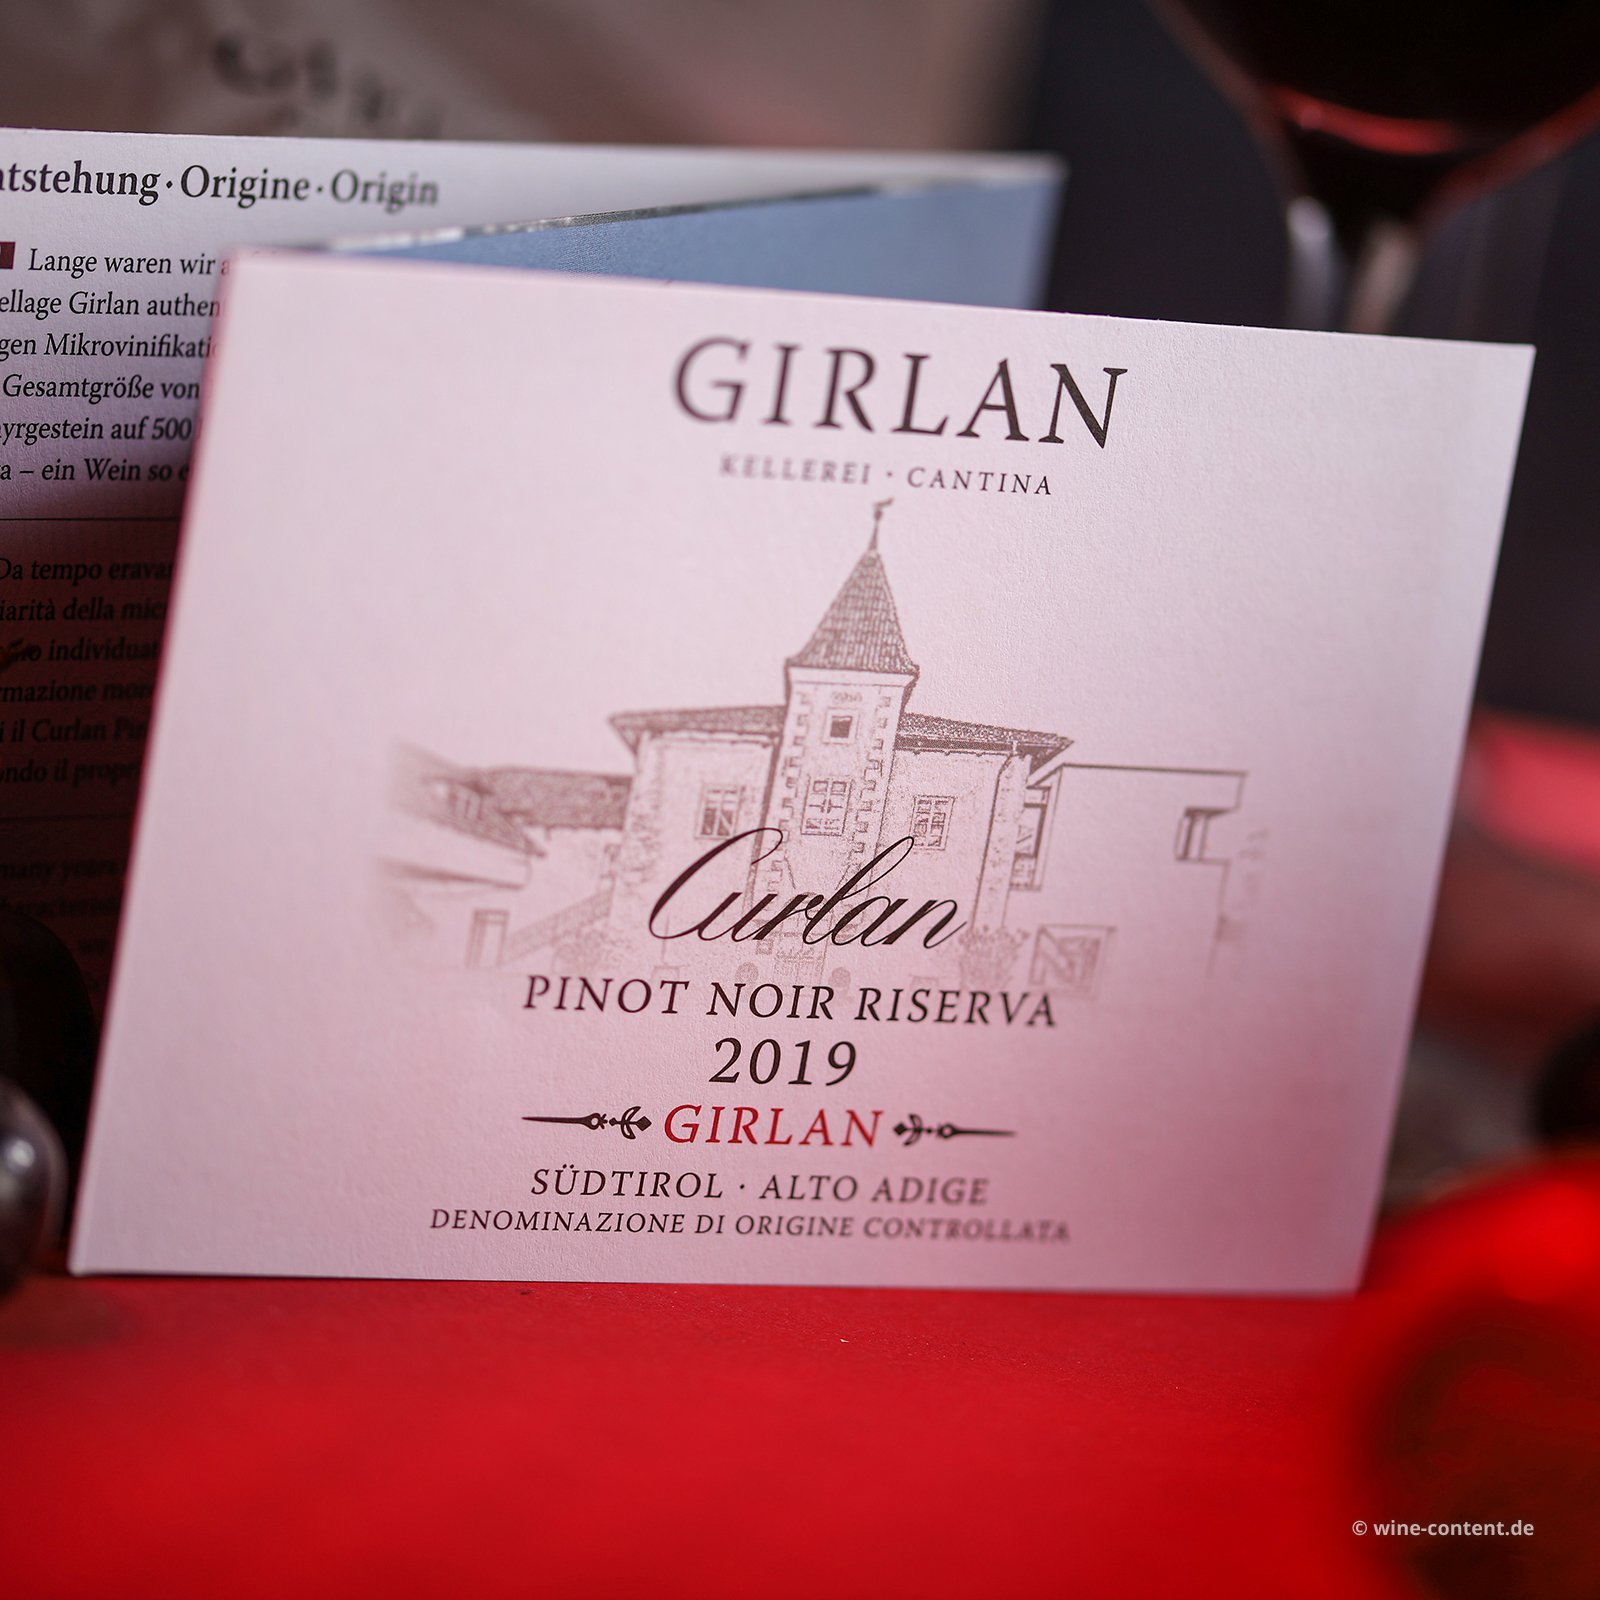 Pinot Noir Riserva 2019 Curlan